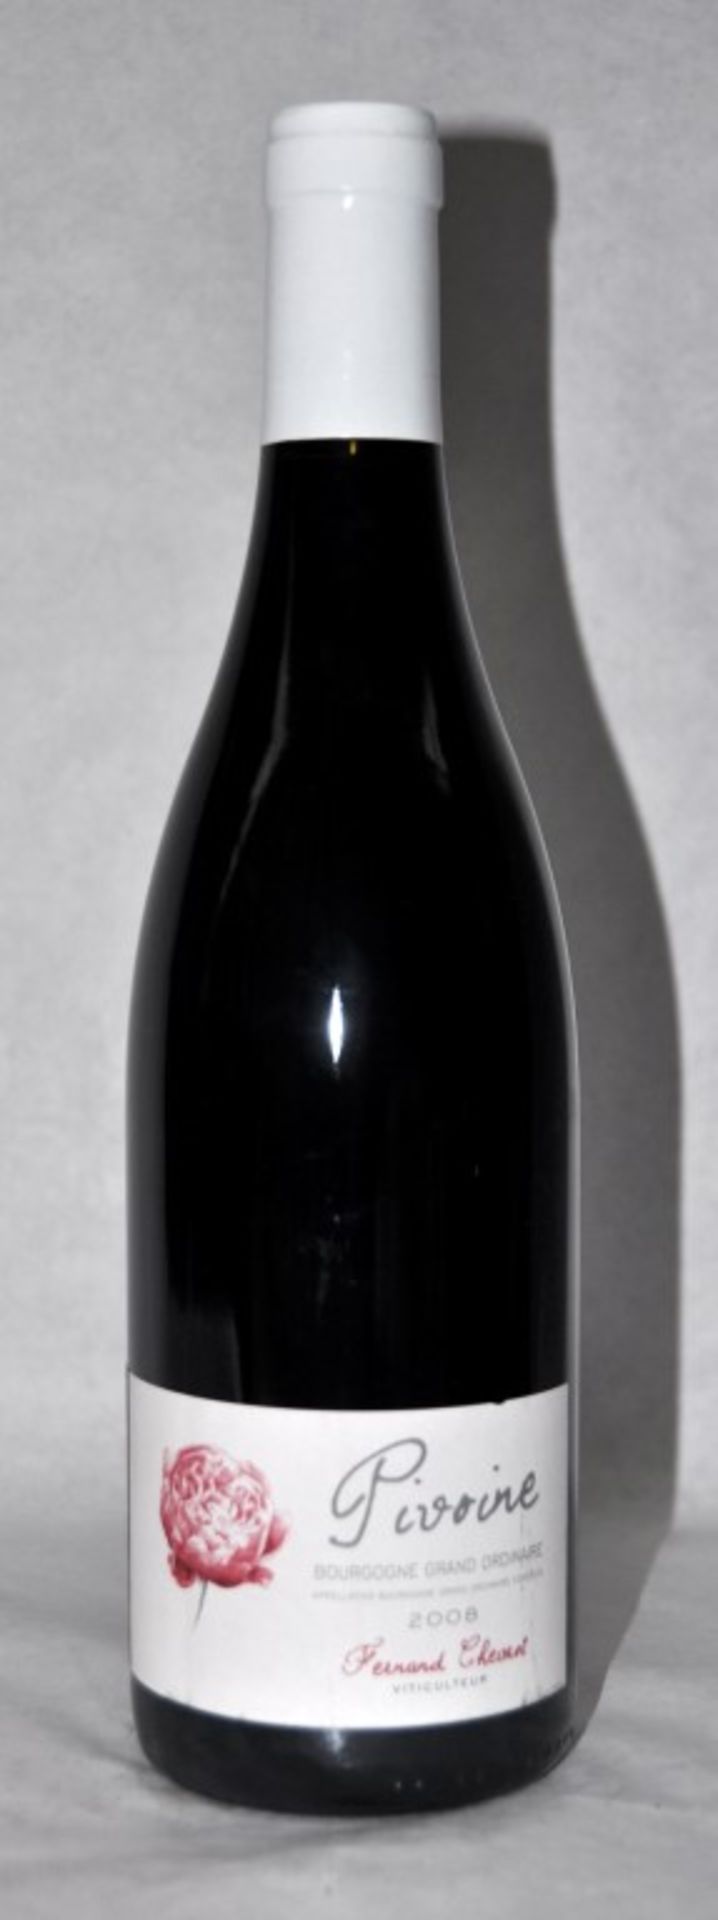 1 x Domaine Chevrot Pivoine Bourgogne Grand Ordinaire Red Wine - French Wine - Year 2008 - Bottle